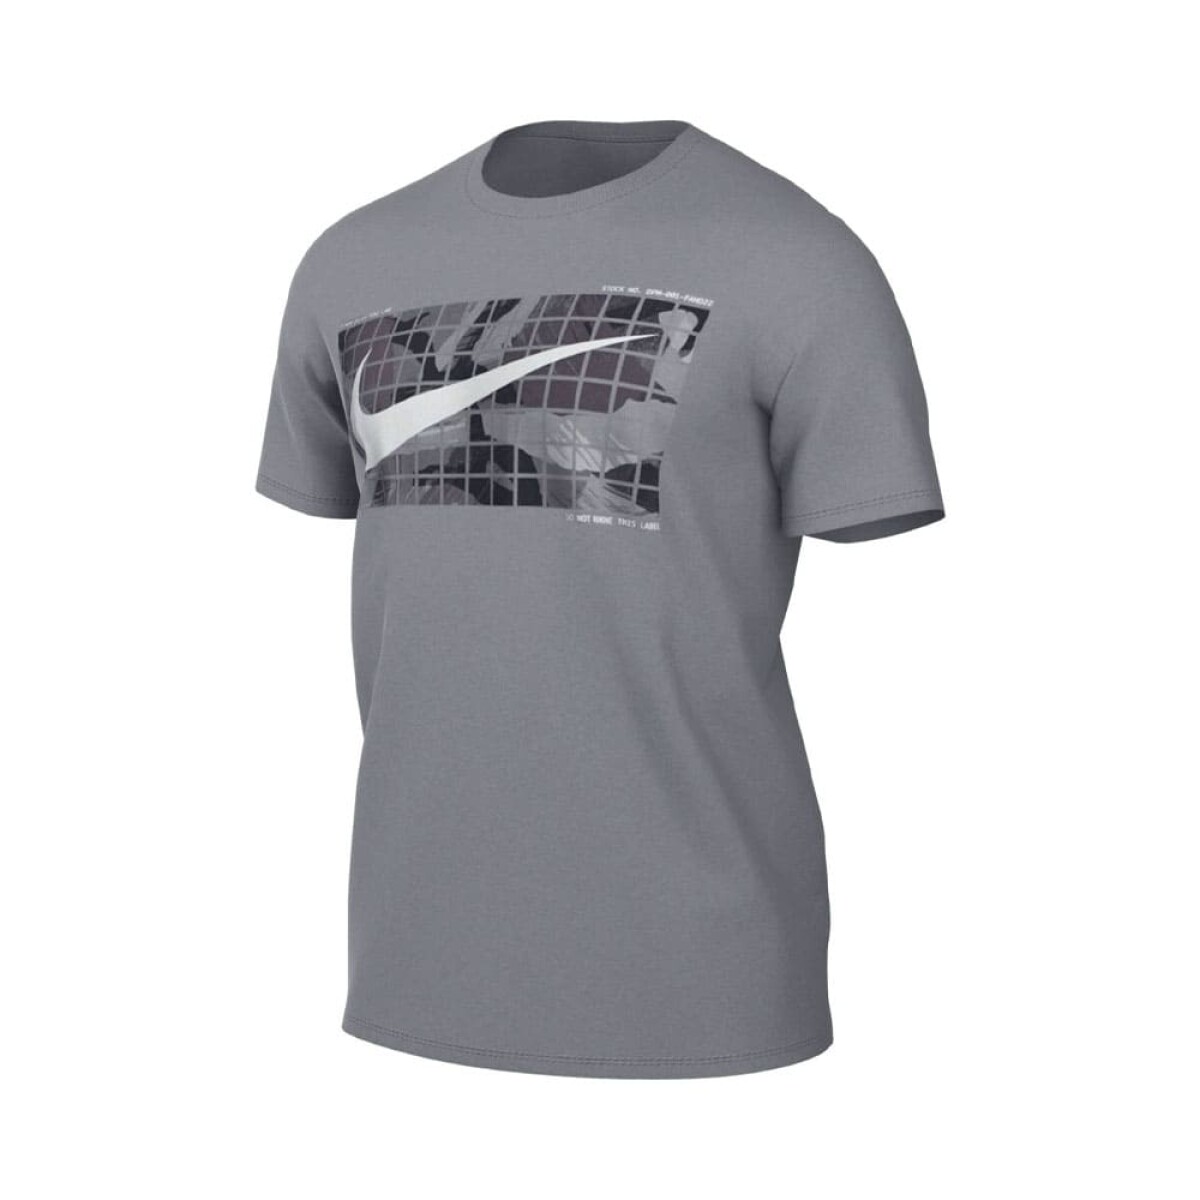 Remera Nike Training Hombre Df Tee Camo Iron Grey - S/C 